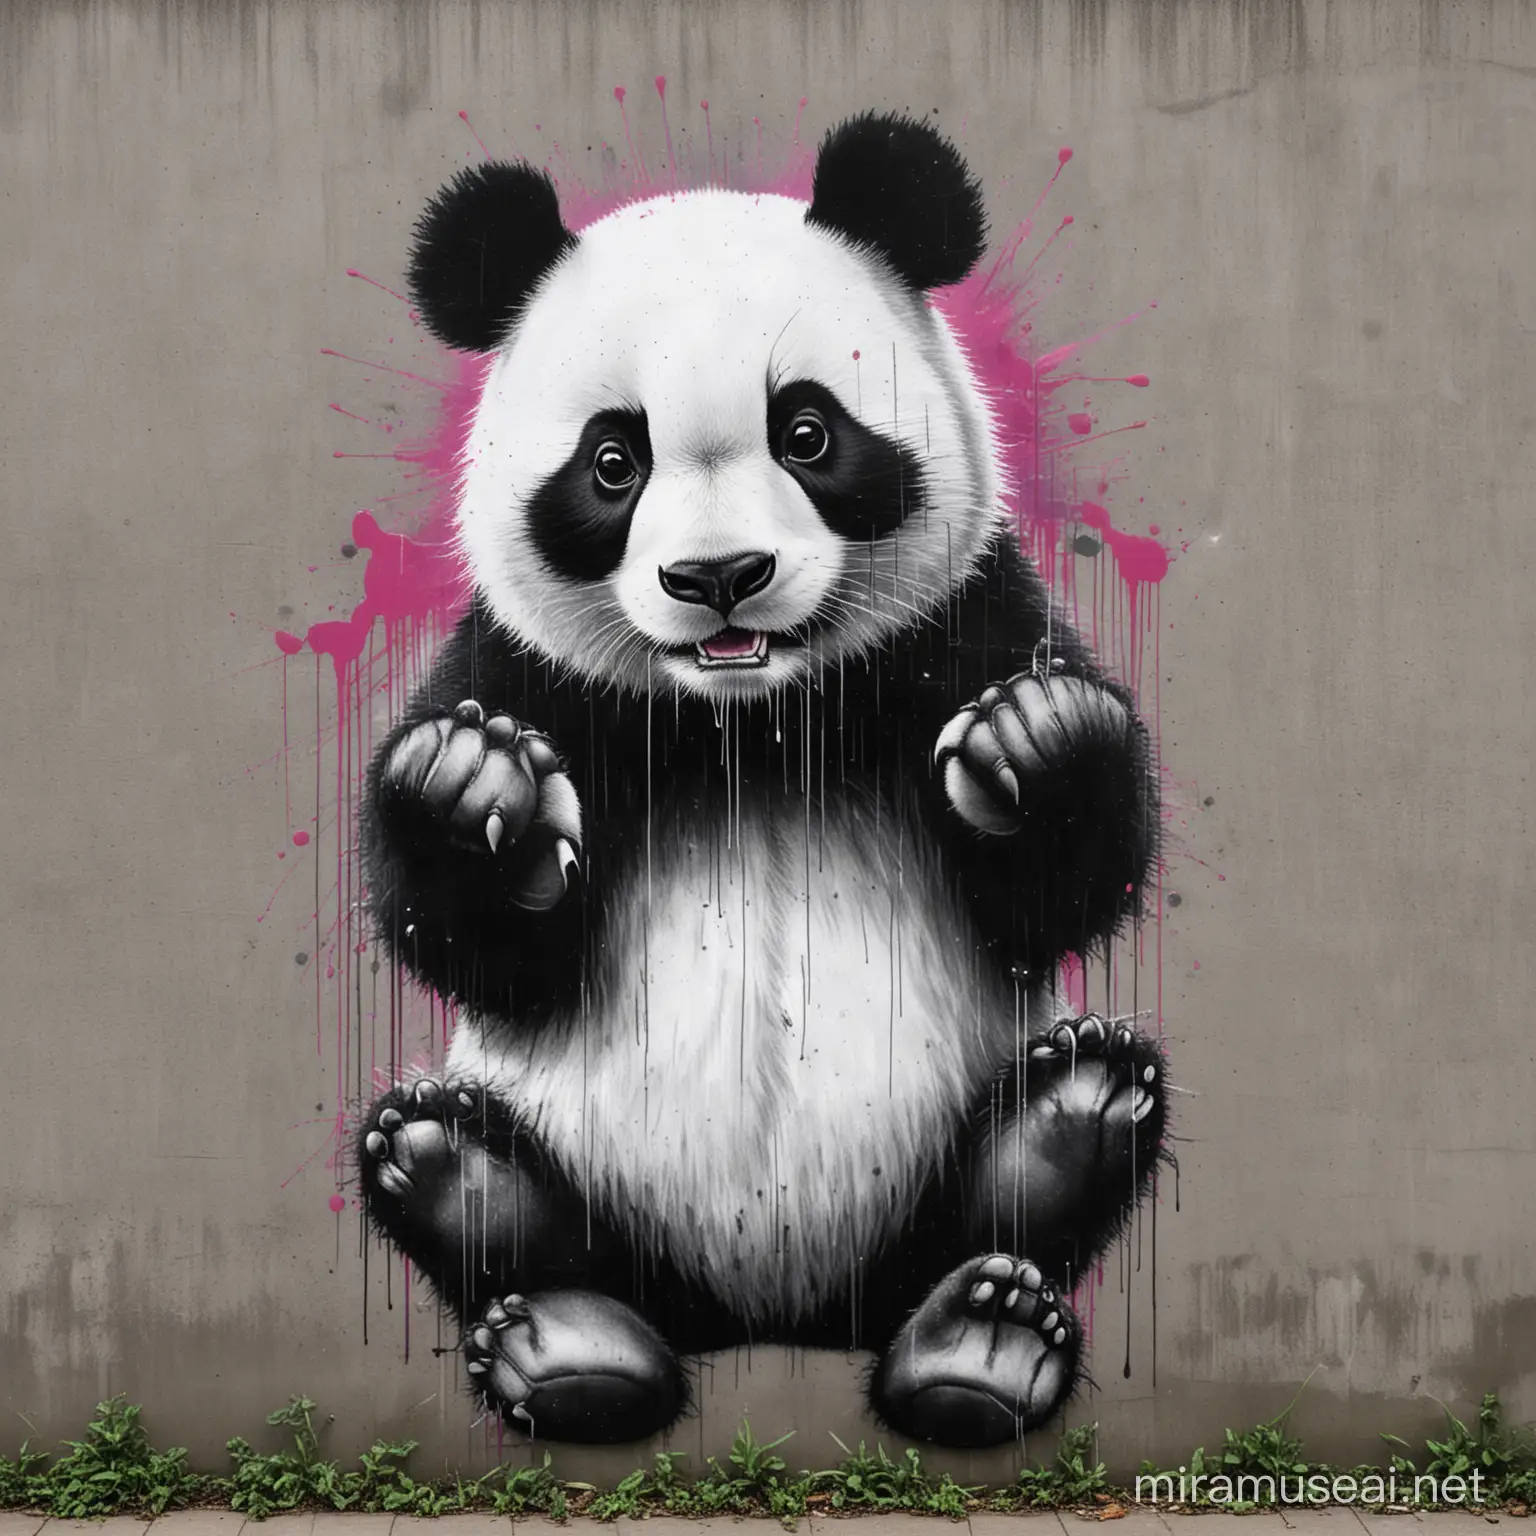 Colorful Panda Graffiti on Urban Wall